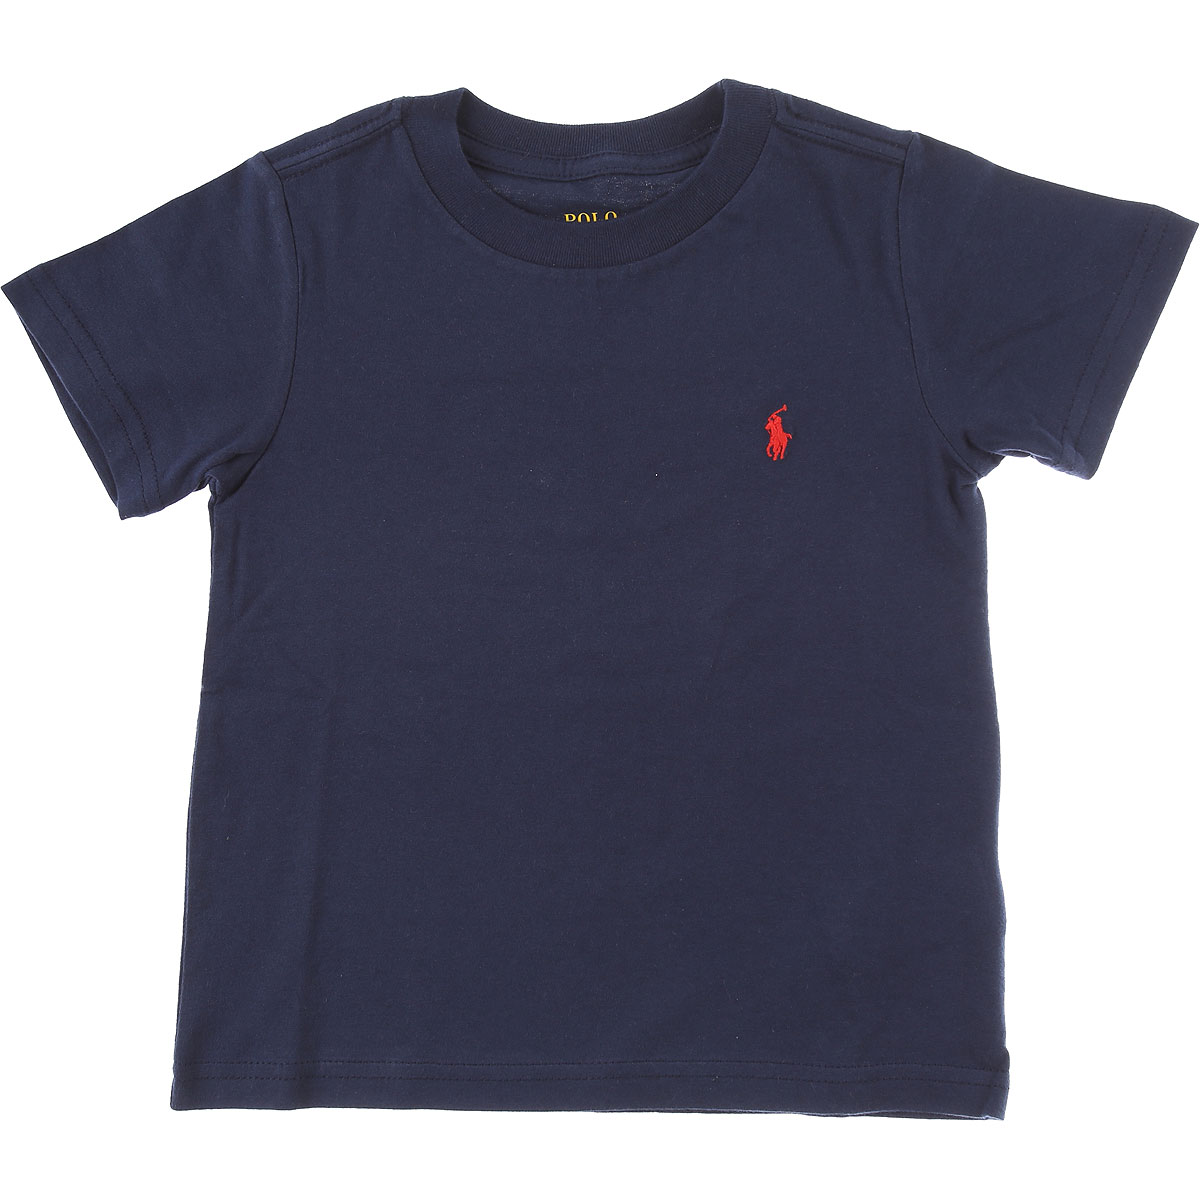 Ralph Lauren Kinder T-Shirt für Jungen Günstig im Sale, Baumwolle, 2017, 2Y 3Y 3Y 4Y 5Y 6Y 7Y L S XL